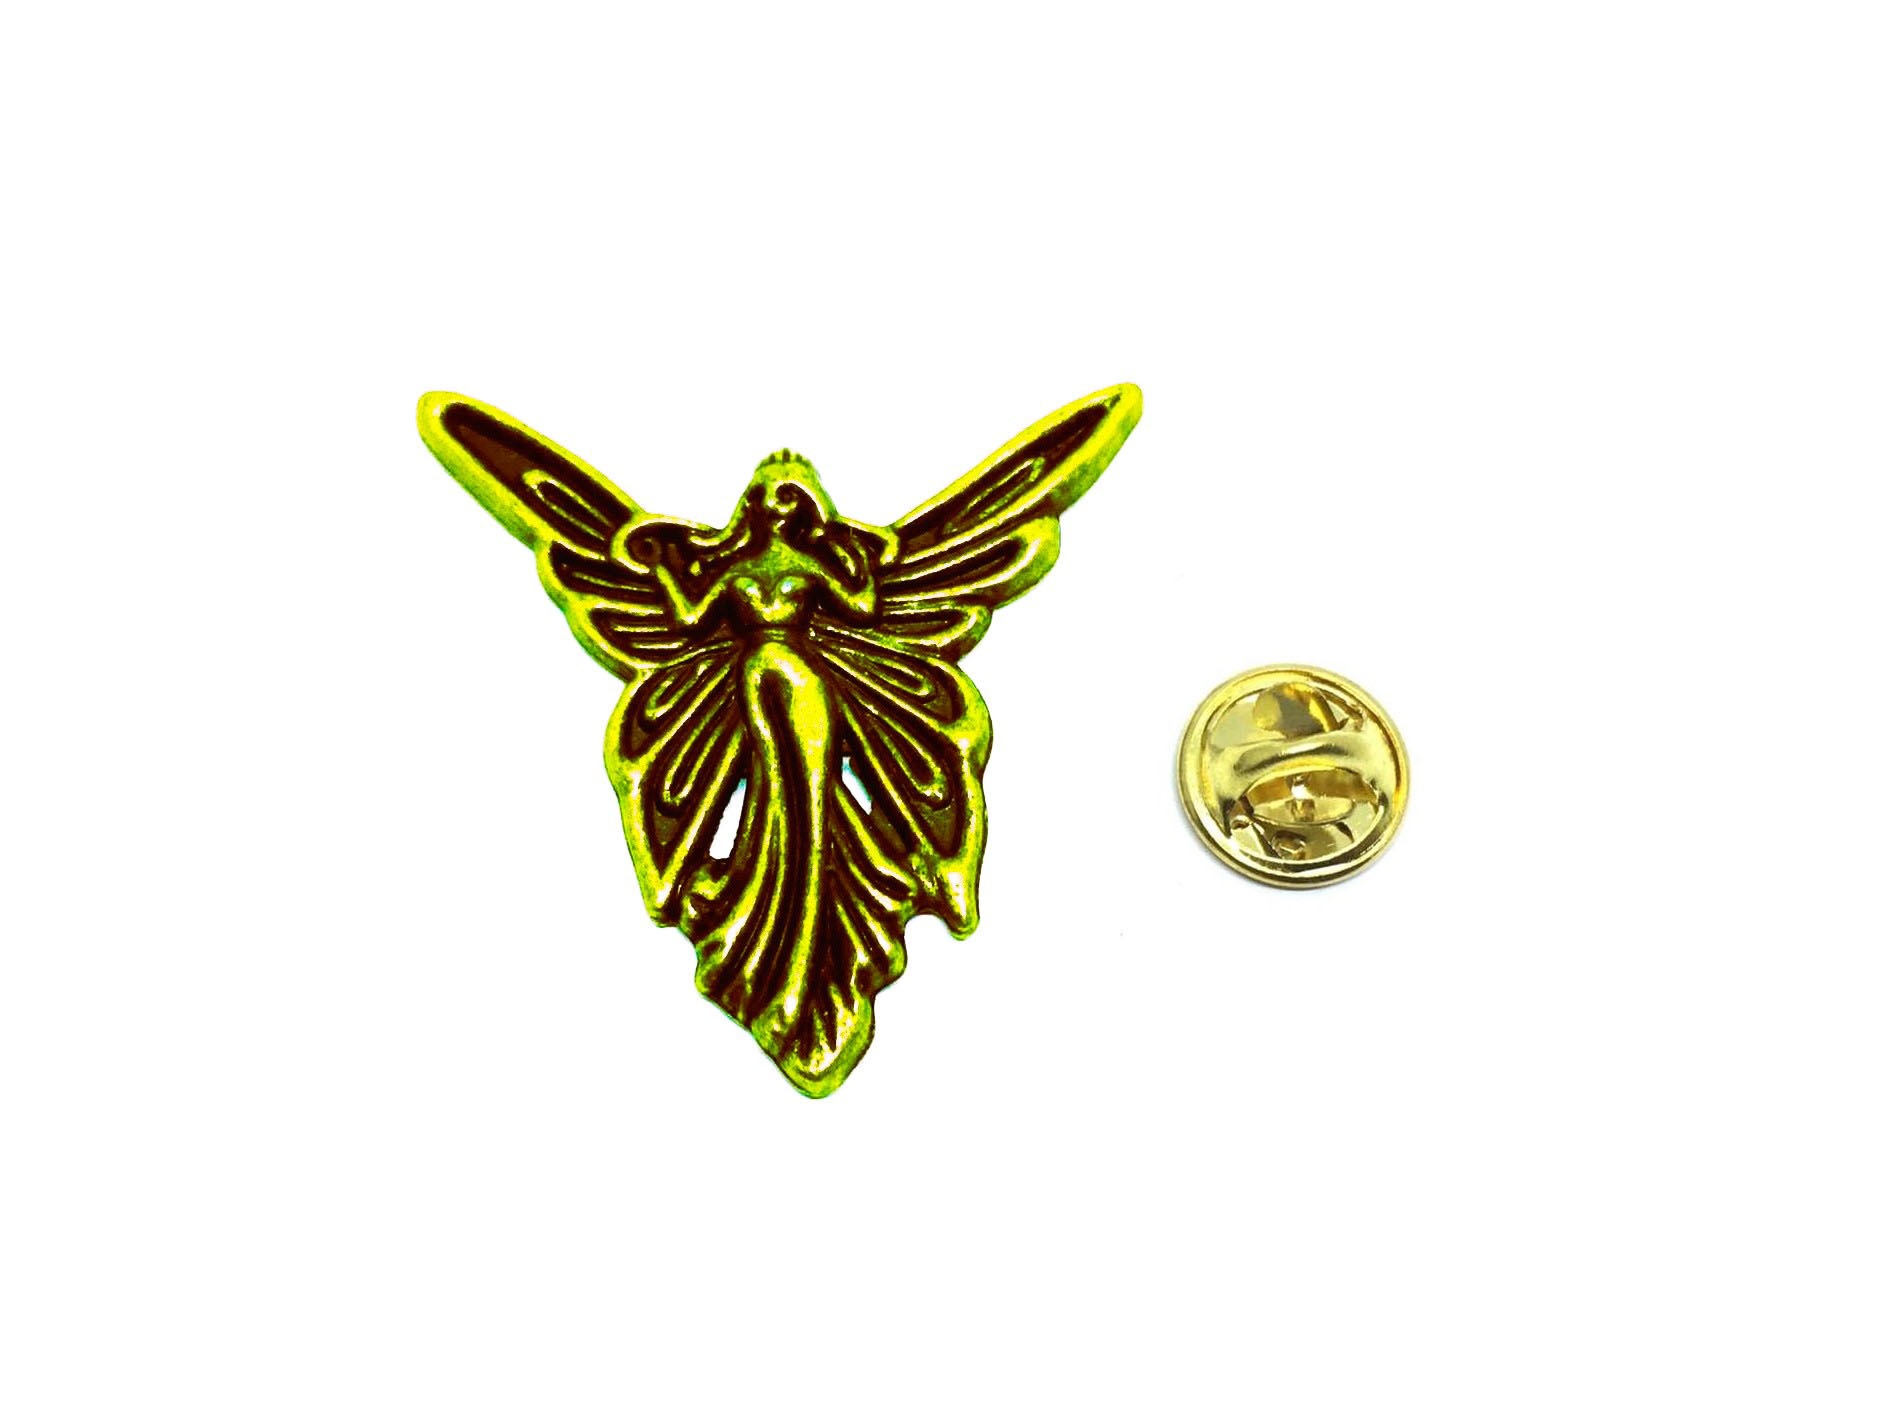 Gold Angel Pin